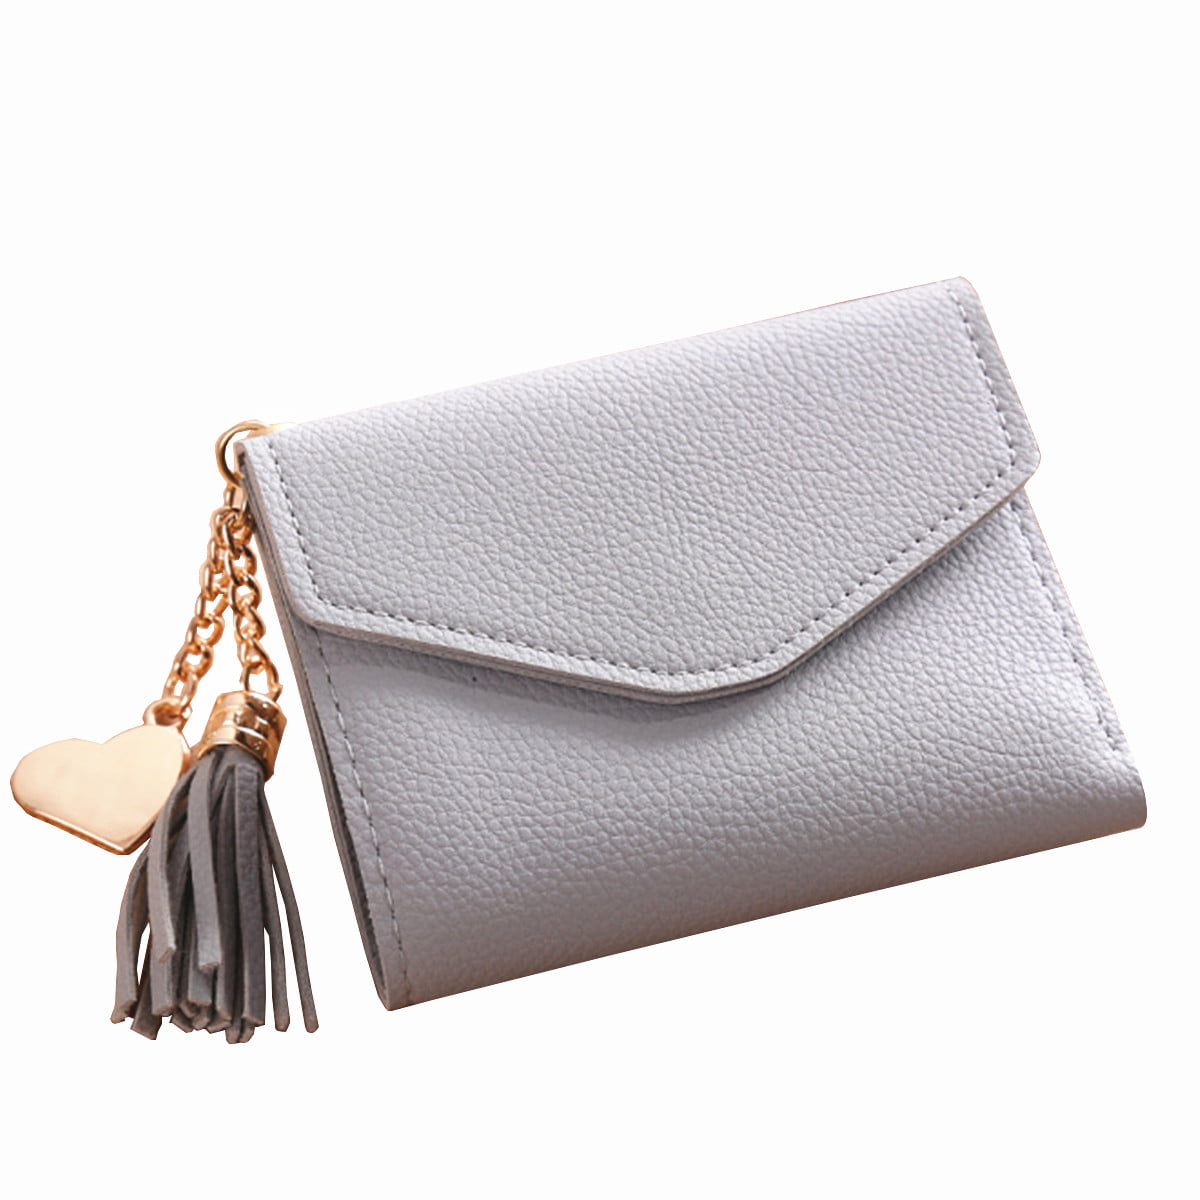 KUDOSALE - Mini Wallet Womens Small PU Leather Coin Purse Credit Card Holder Clutch Handbag ...